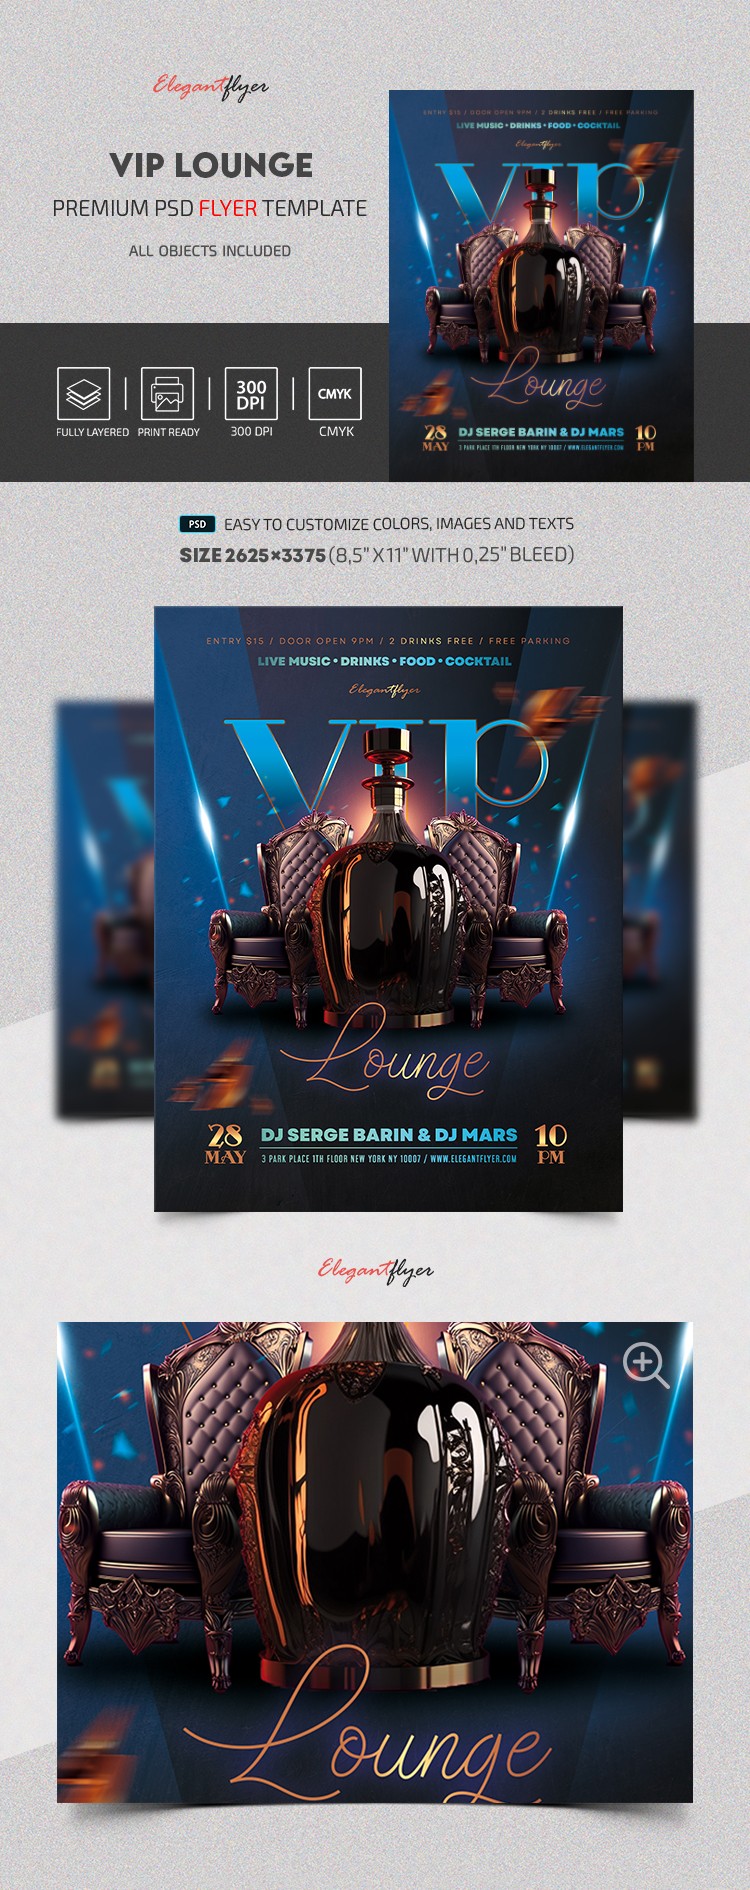 VIP Lounge - Premium PSD Flyer Template by ElegantFlyer